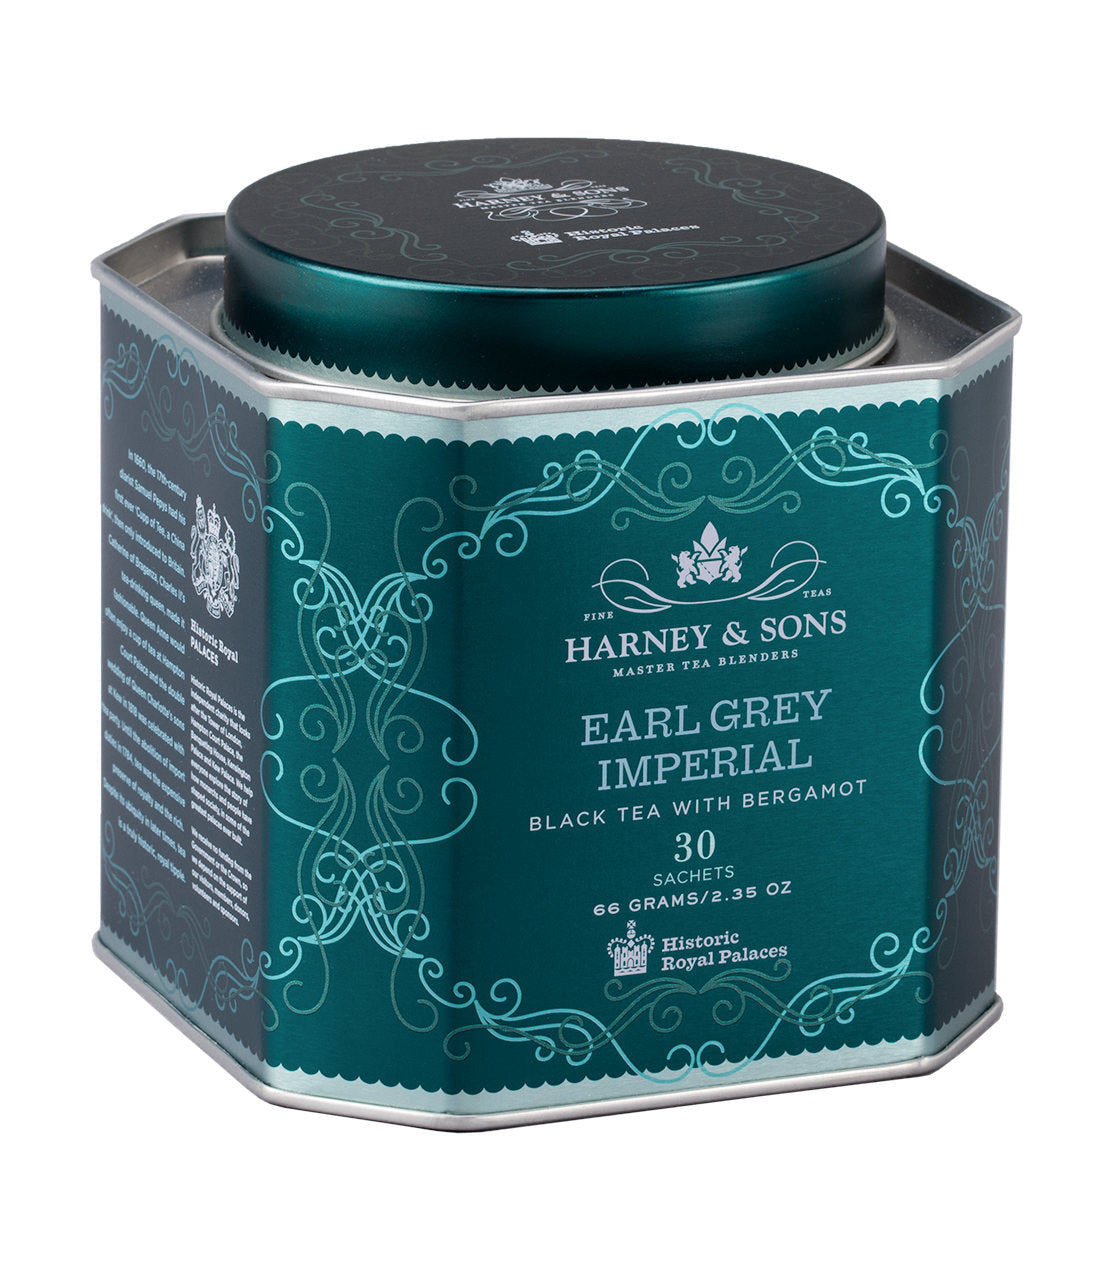 Earl Grey Imperial Tea by Harney & Sons.